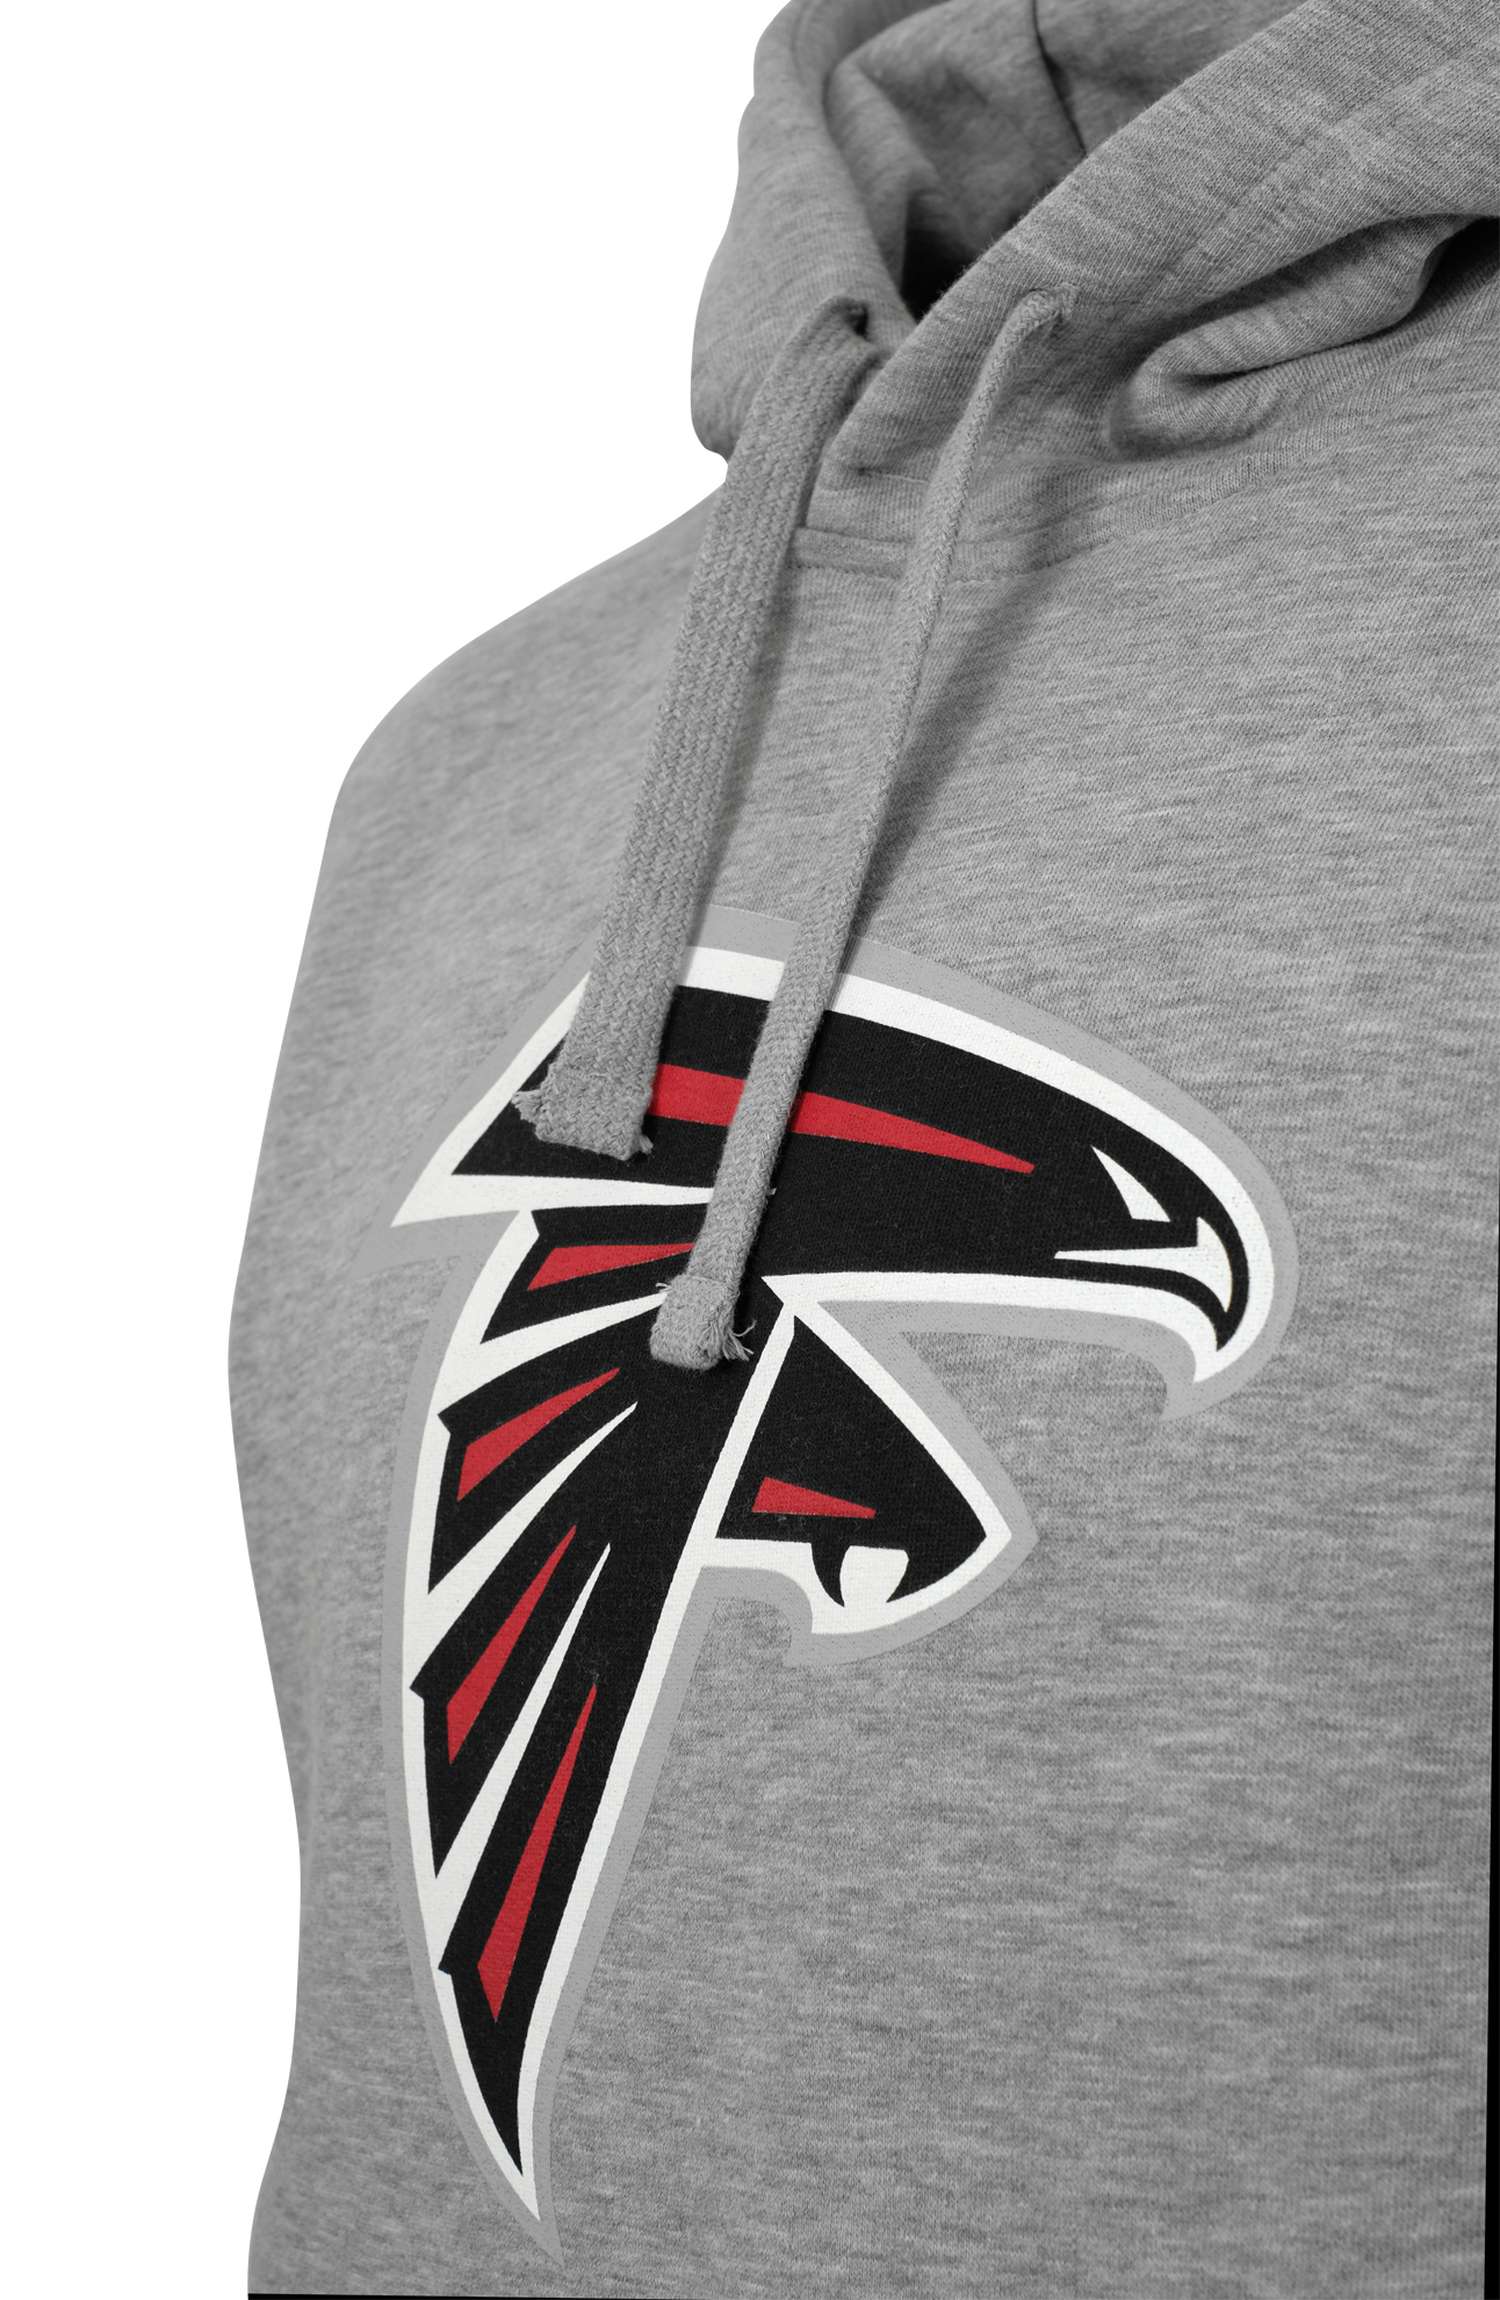 New Era - NFL Atlanta Falcons Team Logo Hoodie